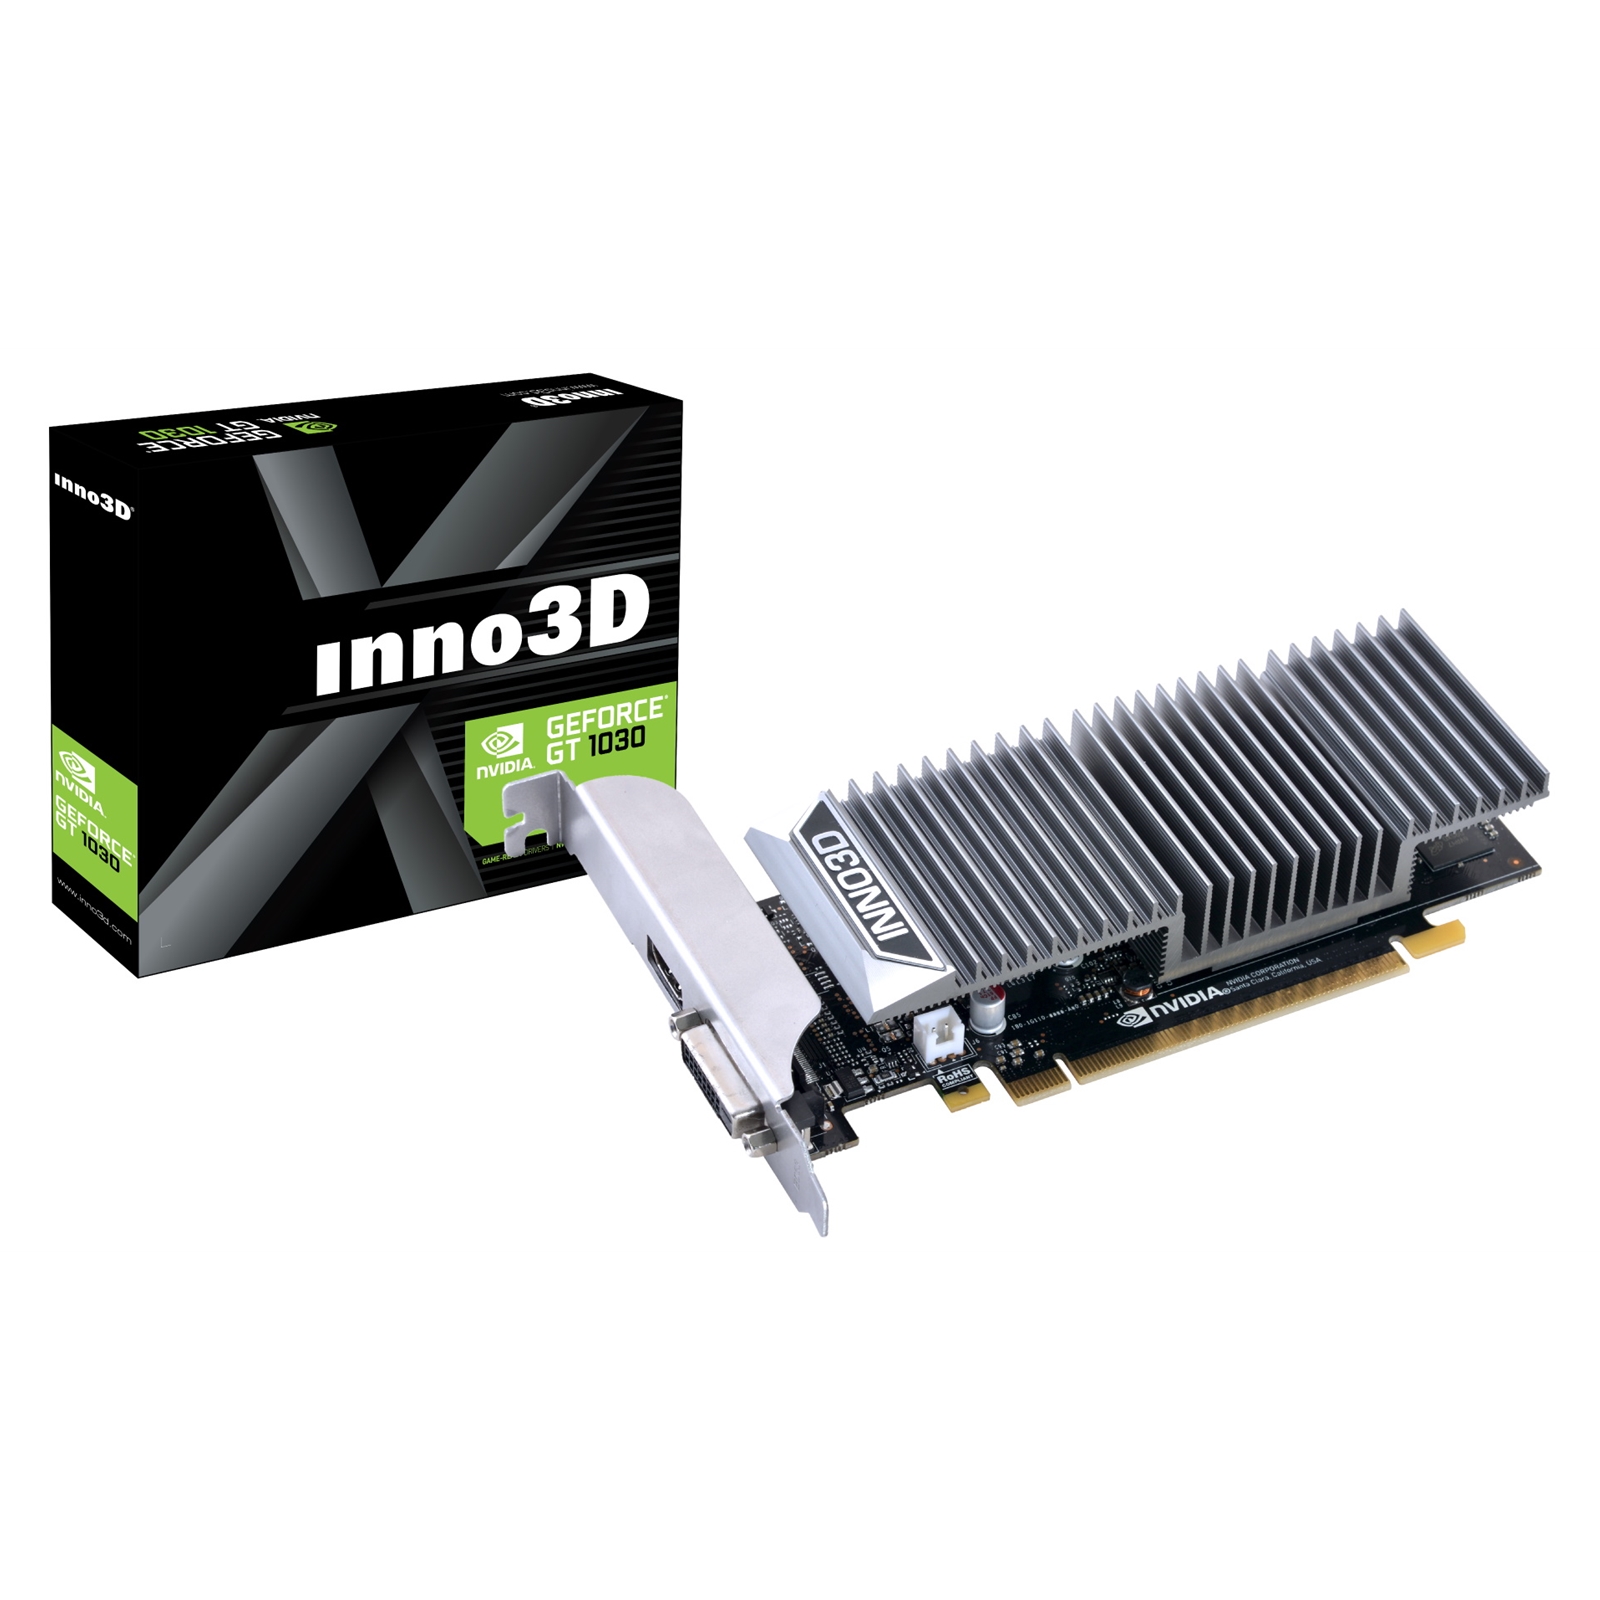 Inno3D Nvidia GeForce GT 1030 2GB GDDR5 Low Profile DVI/HDMI ...